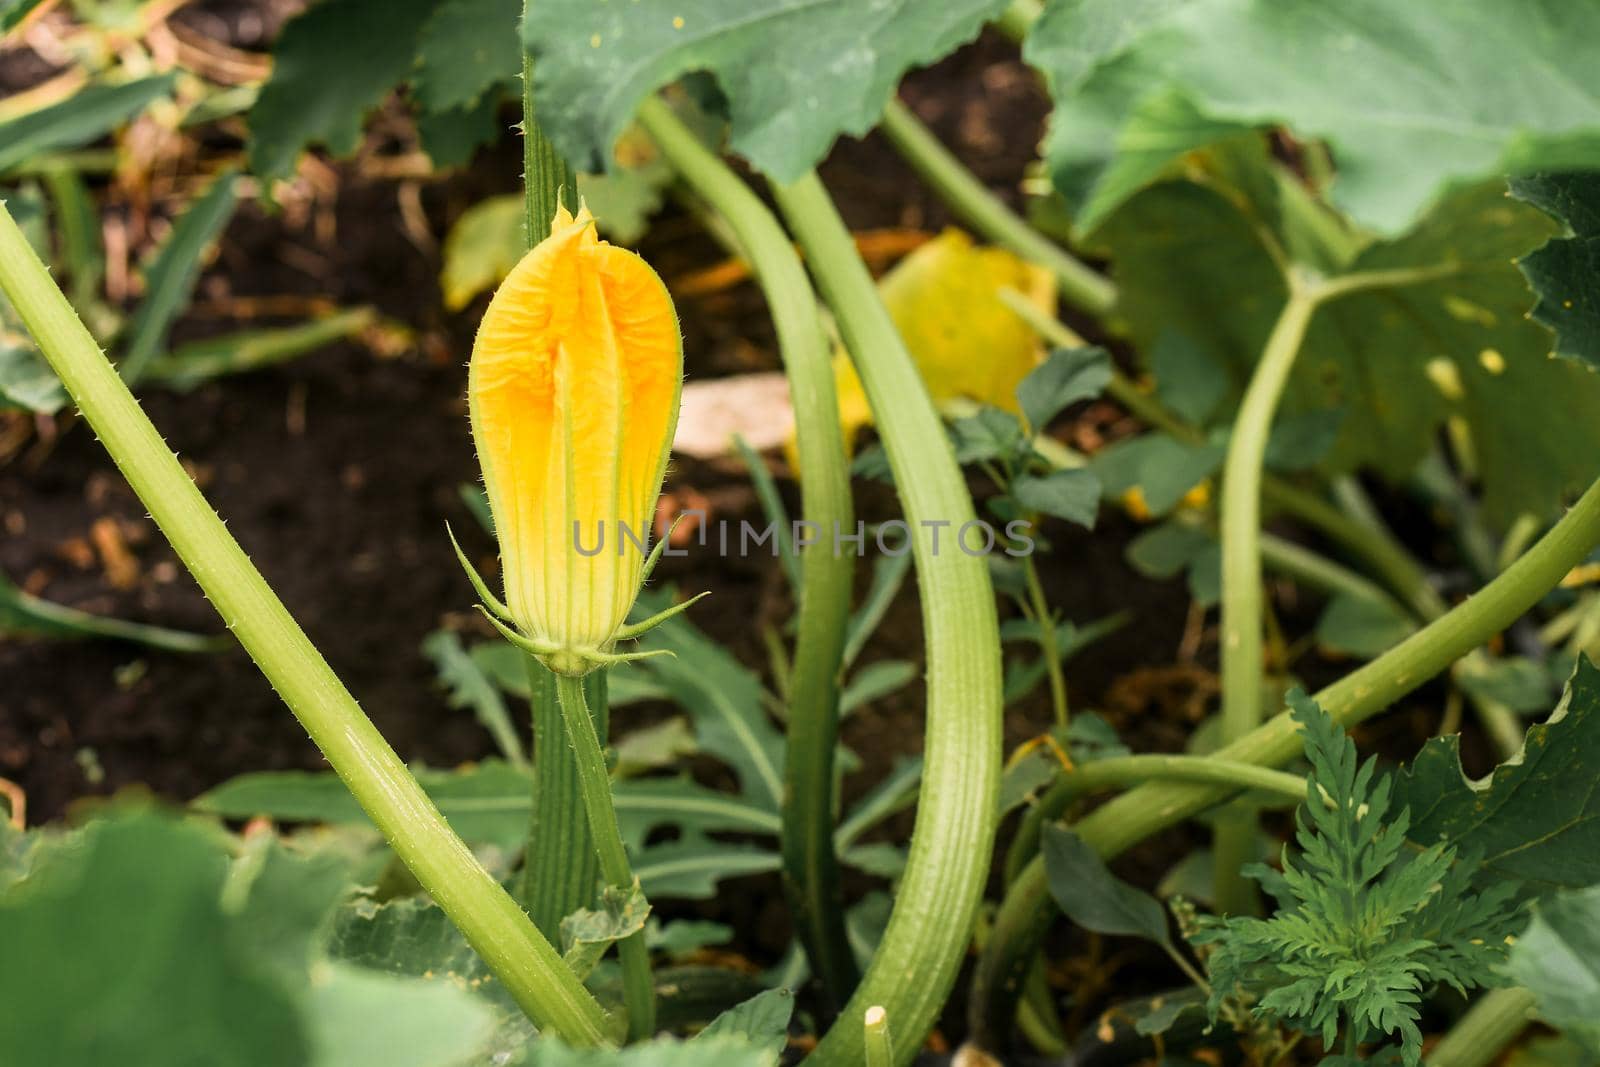 pumpkin flower in the garden. close-up. selective focus